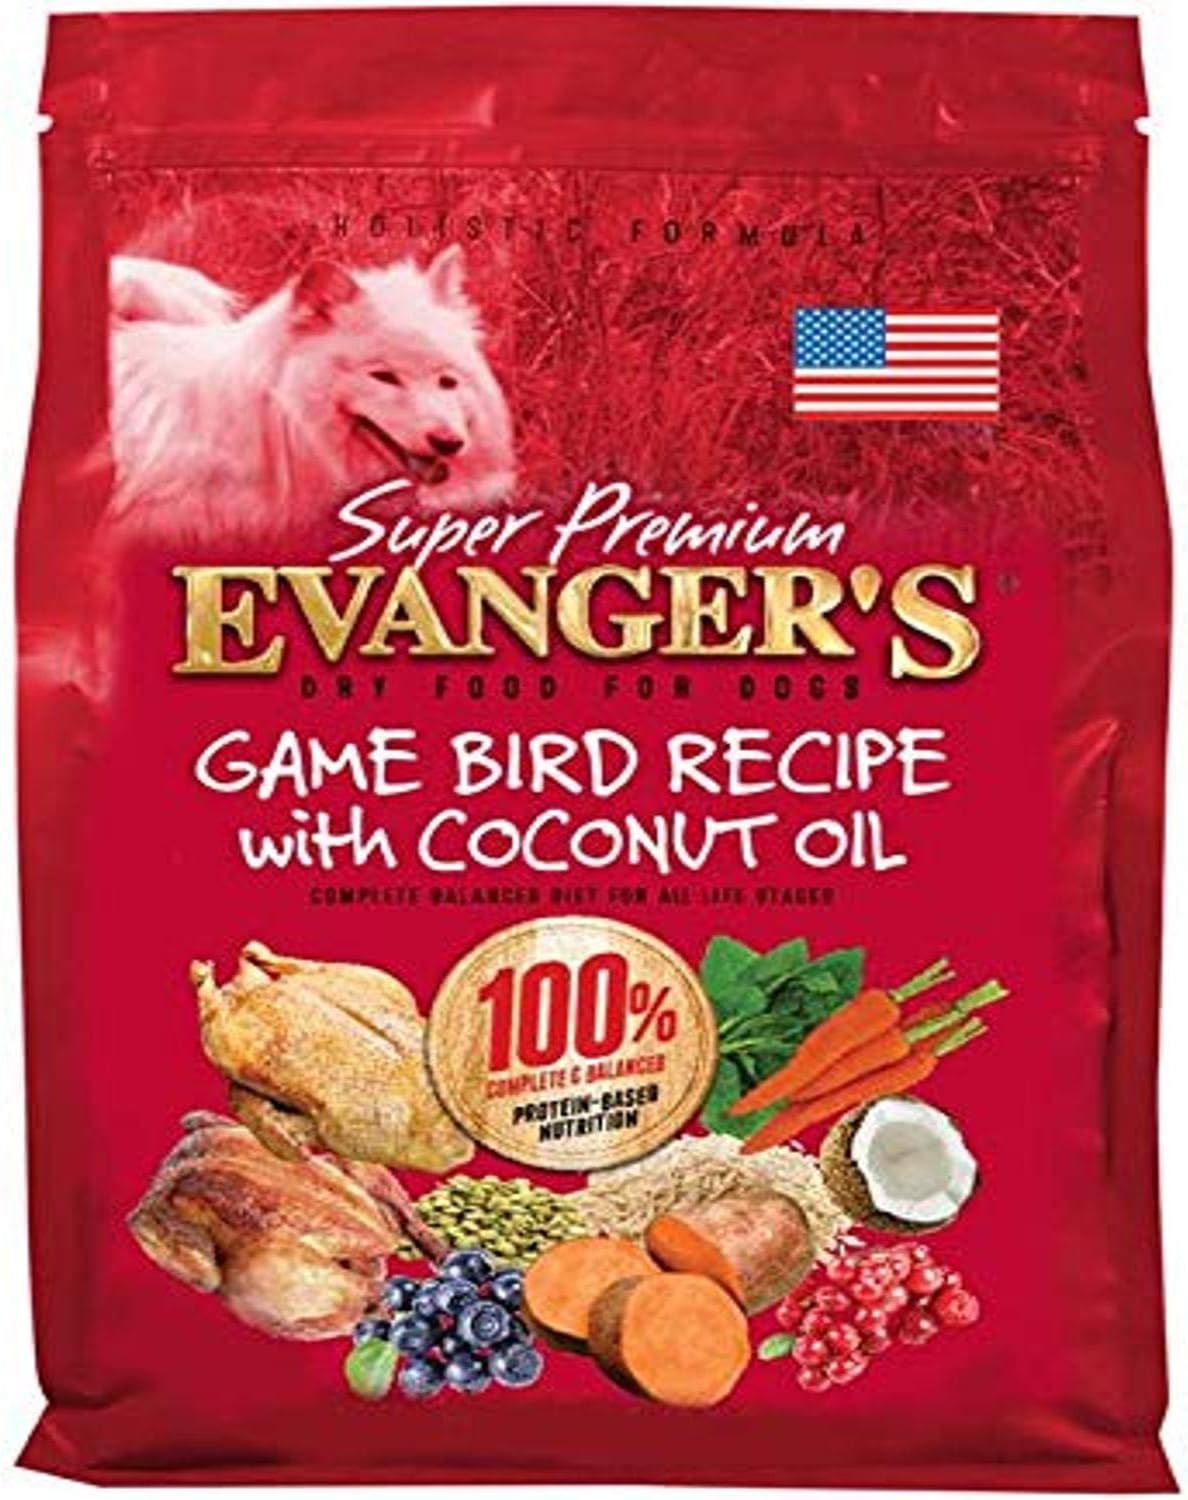 Evanger’s Super Premium Game Bird Recipe with Coconut Oil Dry Dog Food – Gallery Image 1